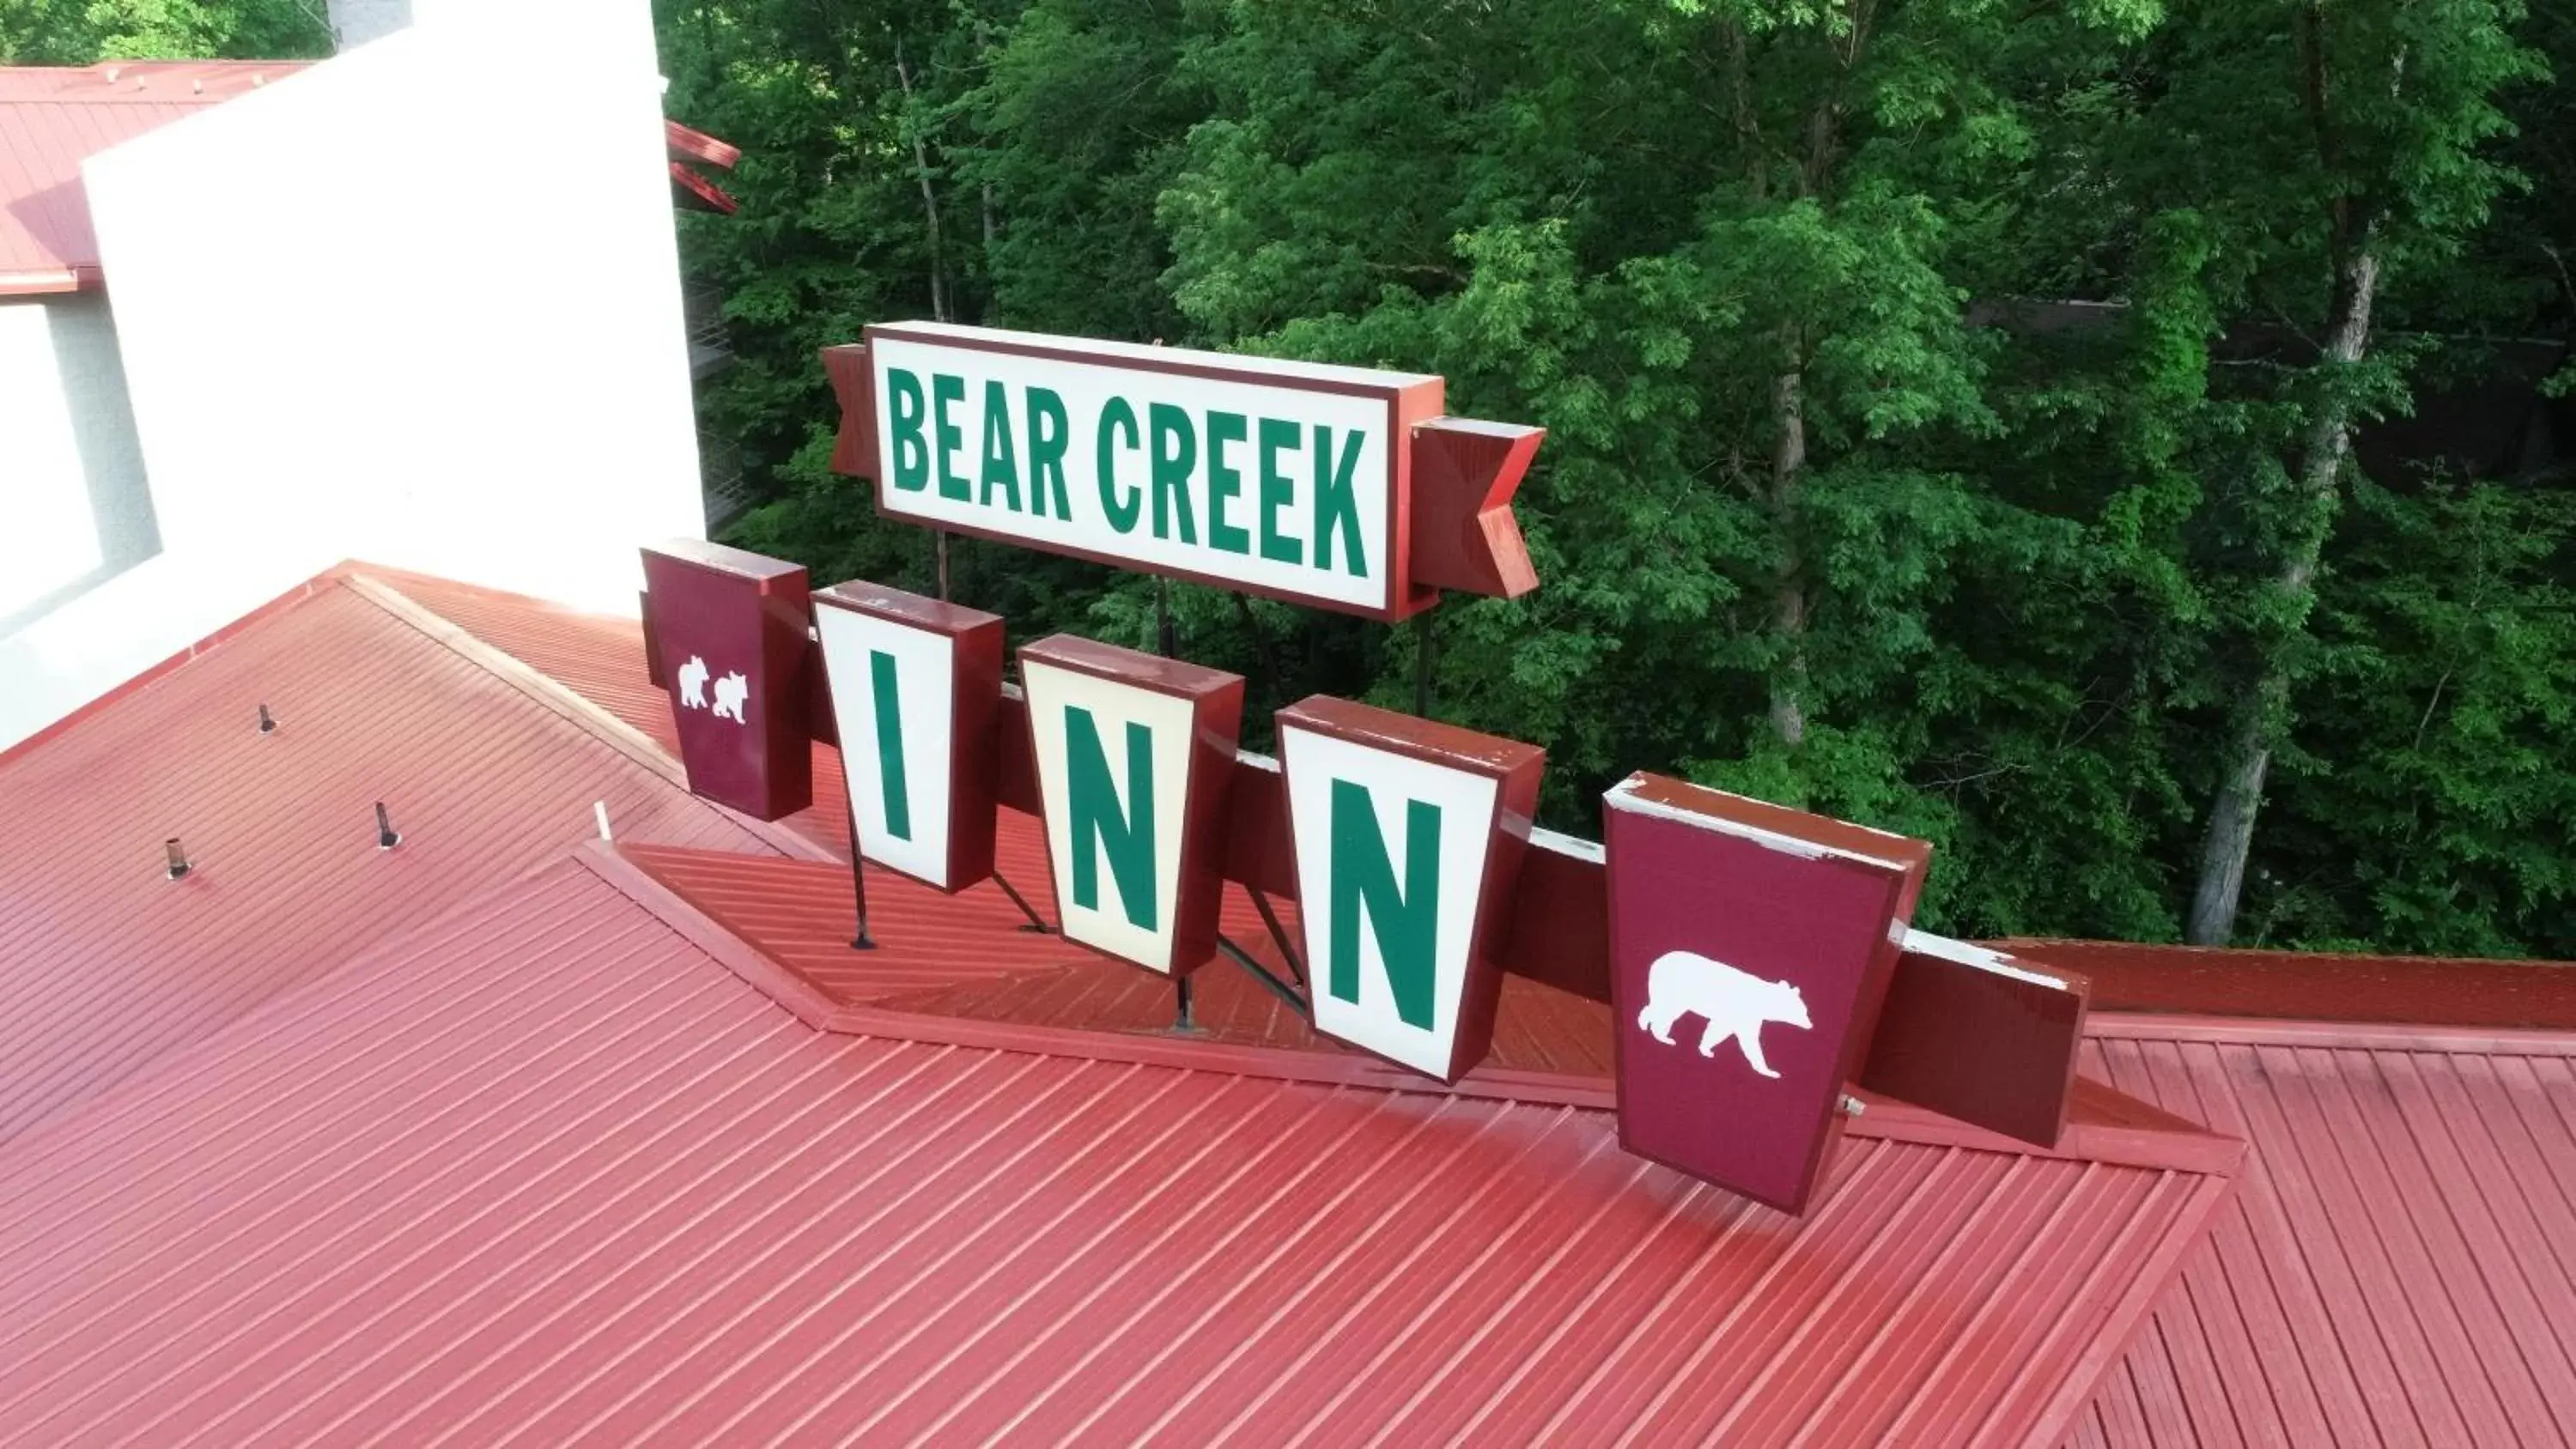 Bear Creek Inn Gatlinburg, TN